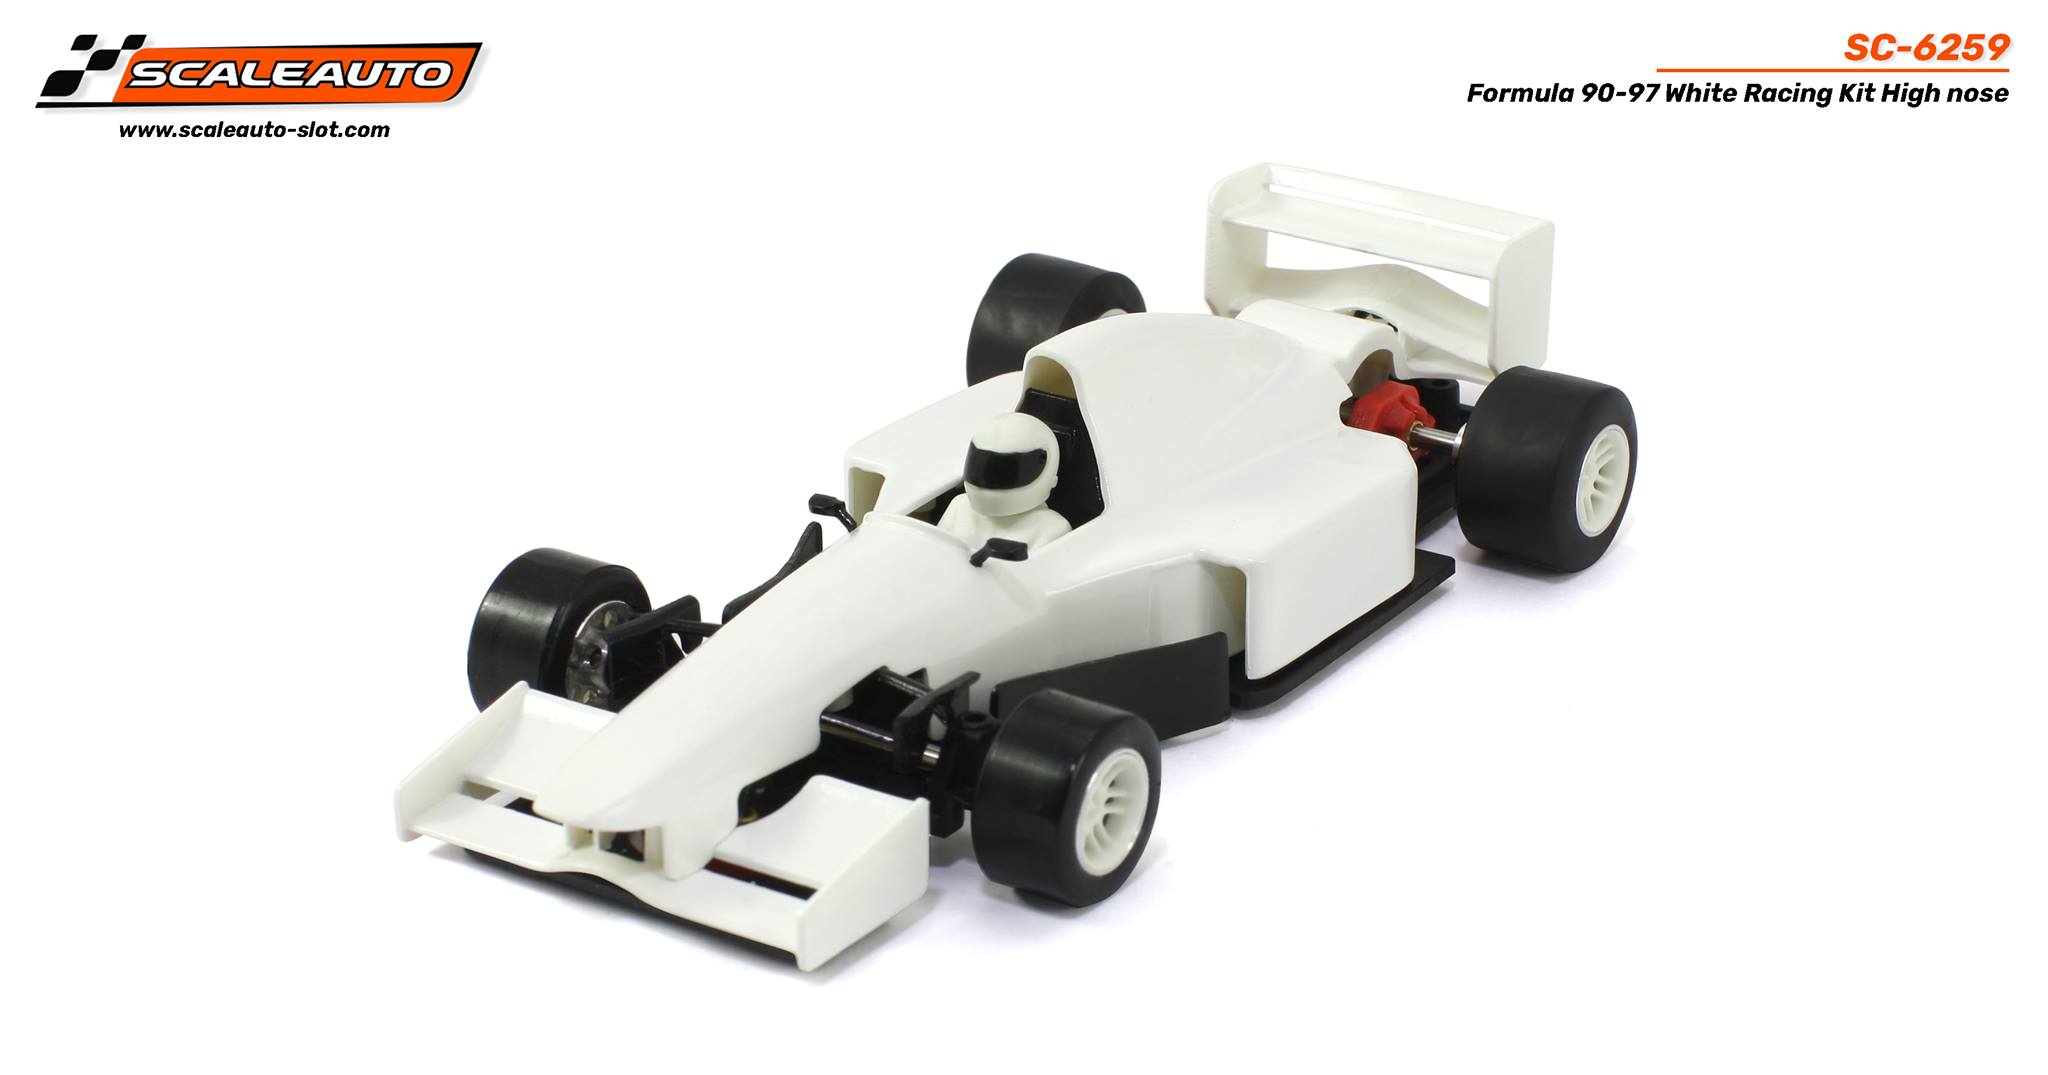 SC-6259 Formula 90-97 High Nose White kit car